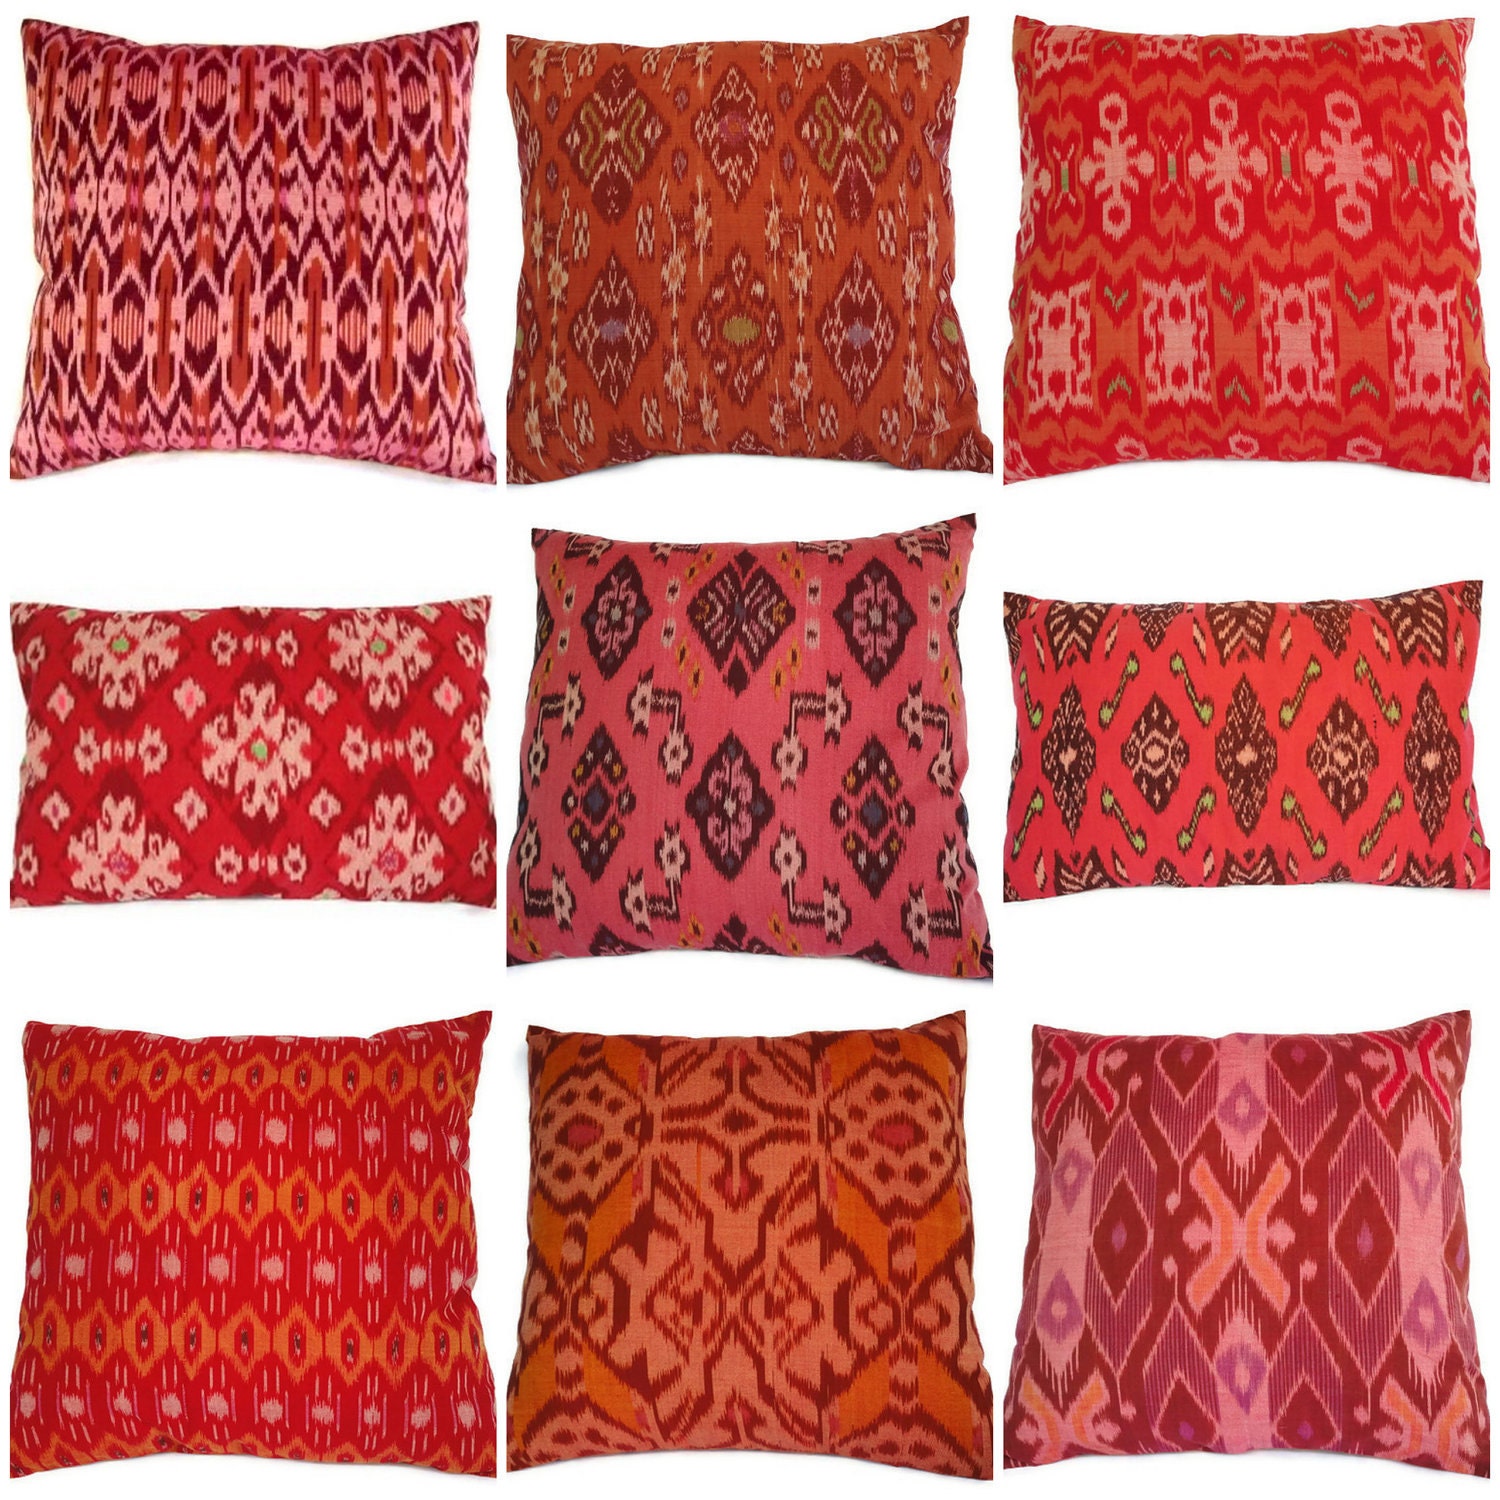 Ikat Pillow, Coral, Red, Orange, 16x16, 12x18, Set of 9